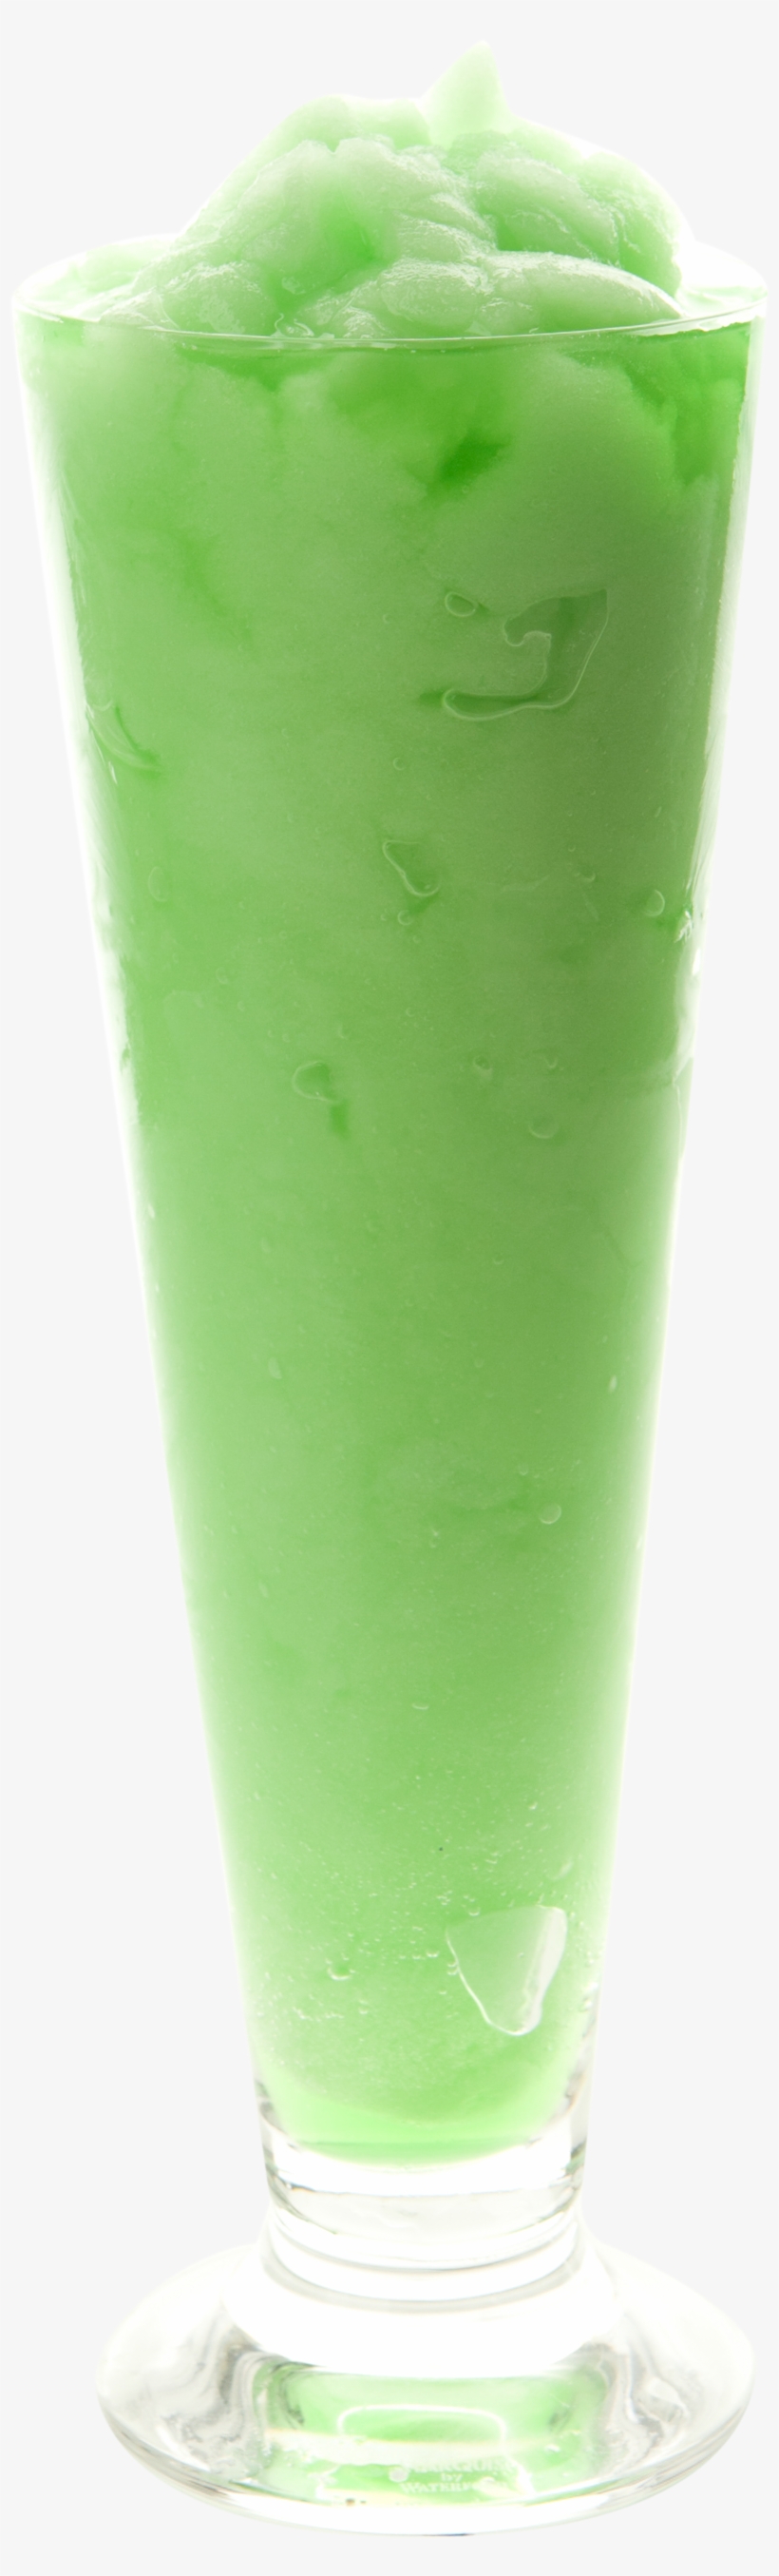 Green Apple Slushie - Smoothie, transparent png #7686644